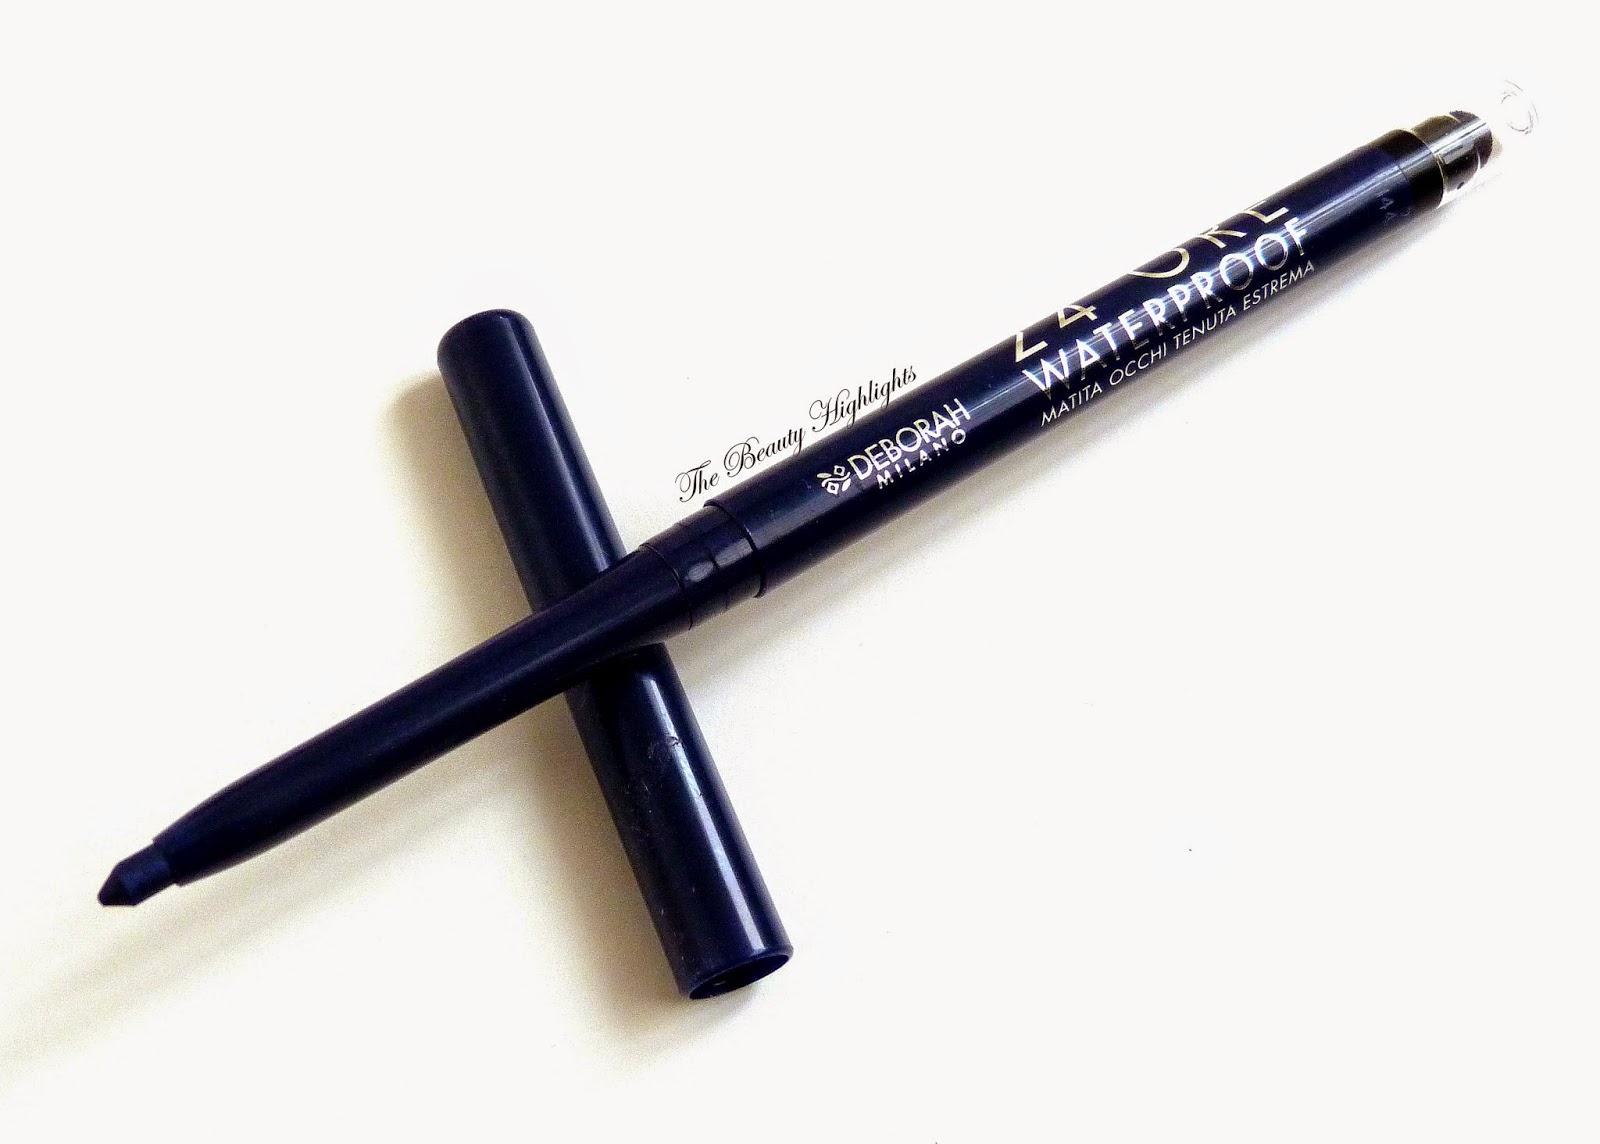 The Beauty Highlights: Deborah Milano 24 ORE Waterproof Eye Pencil in 04  Review